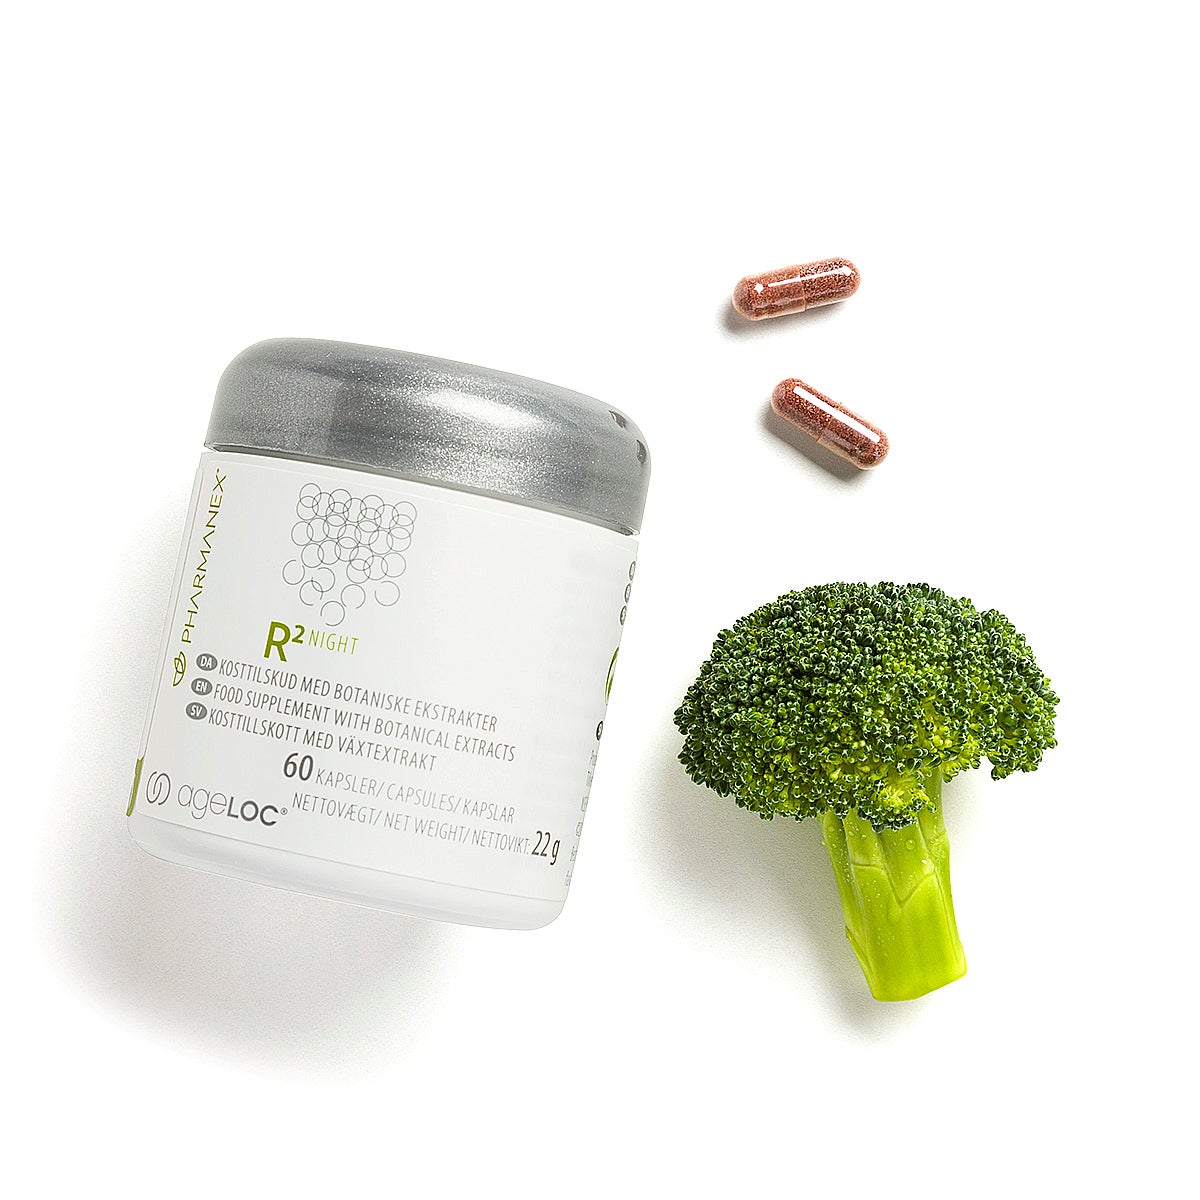 pharmanex-r2-night-bottle-broccoli-lifestyle-aerial